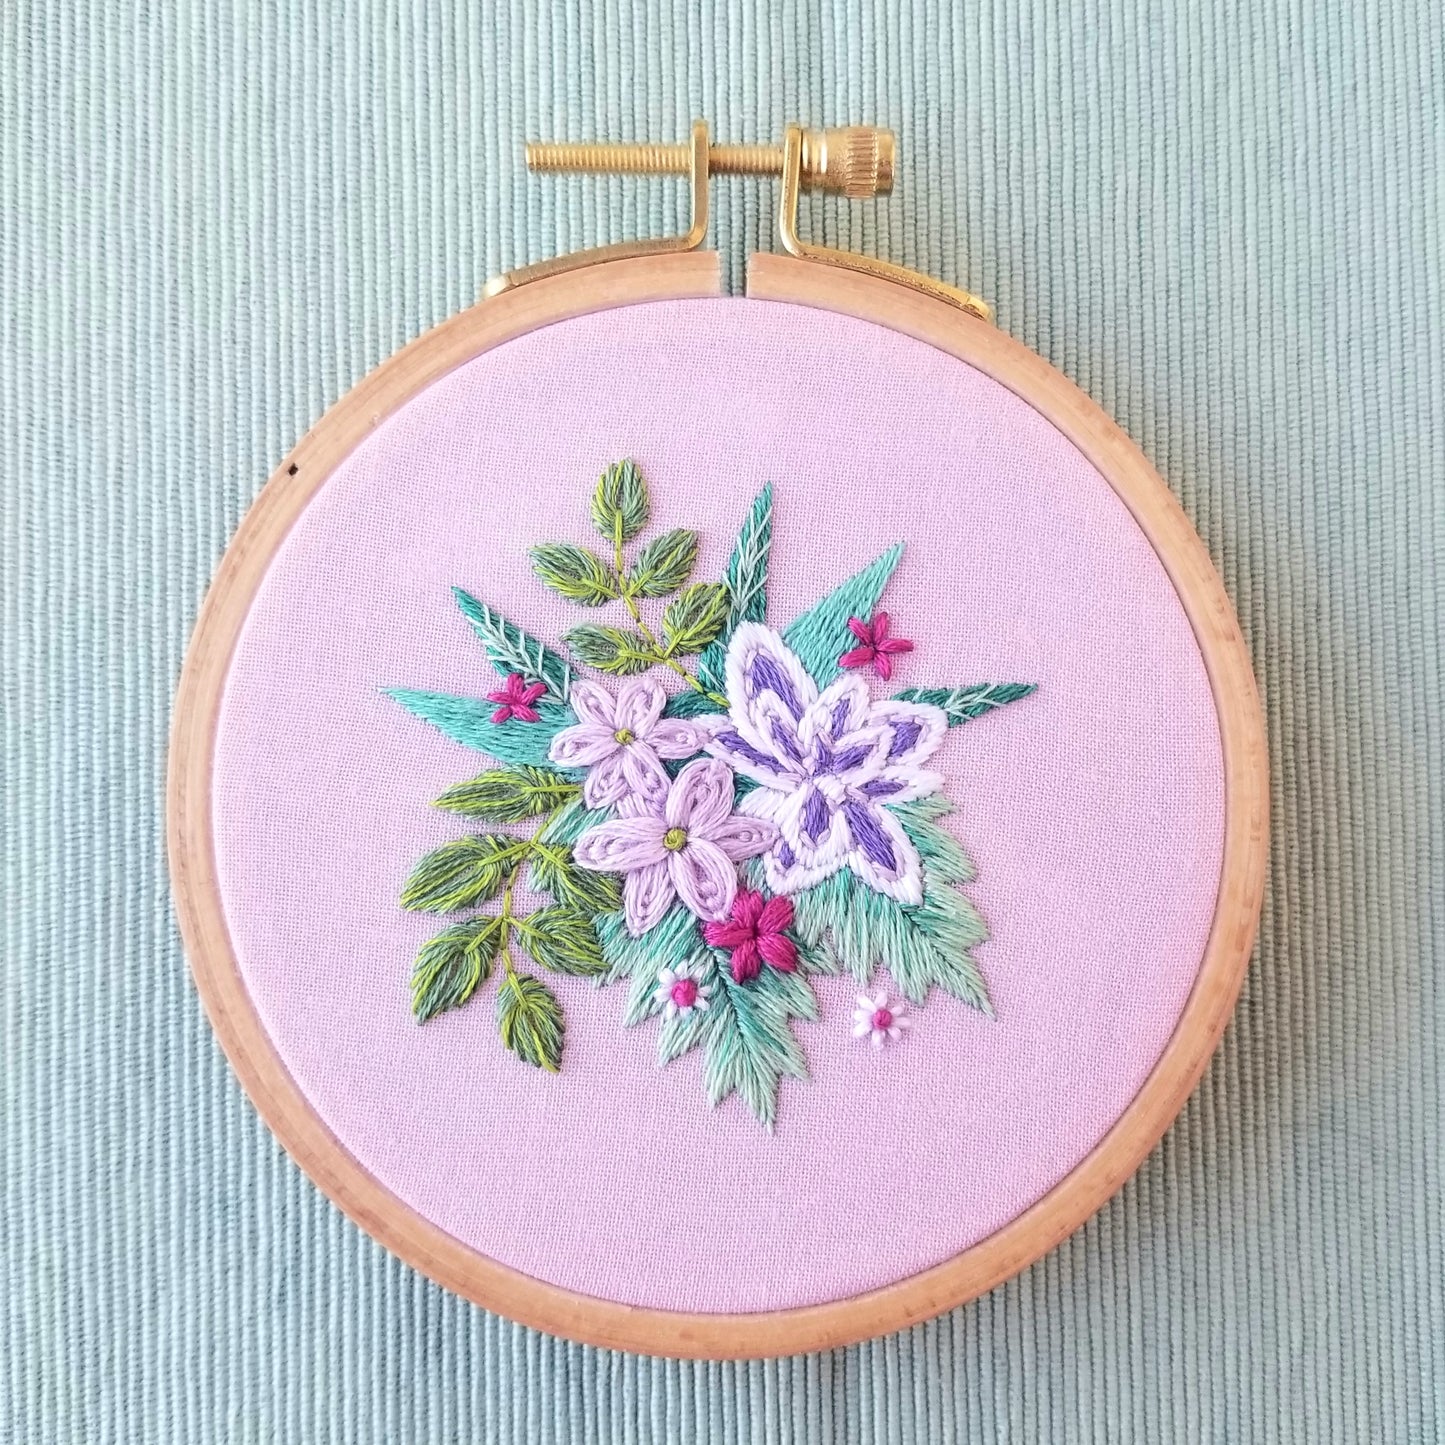 Embroidery Beginner's Kit - Petals